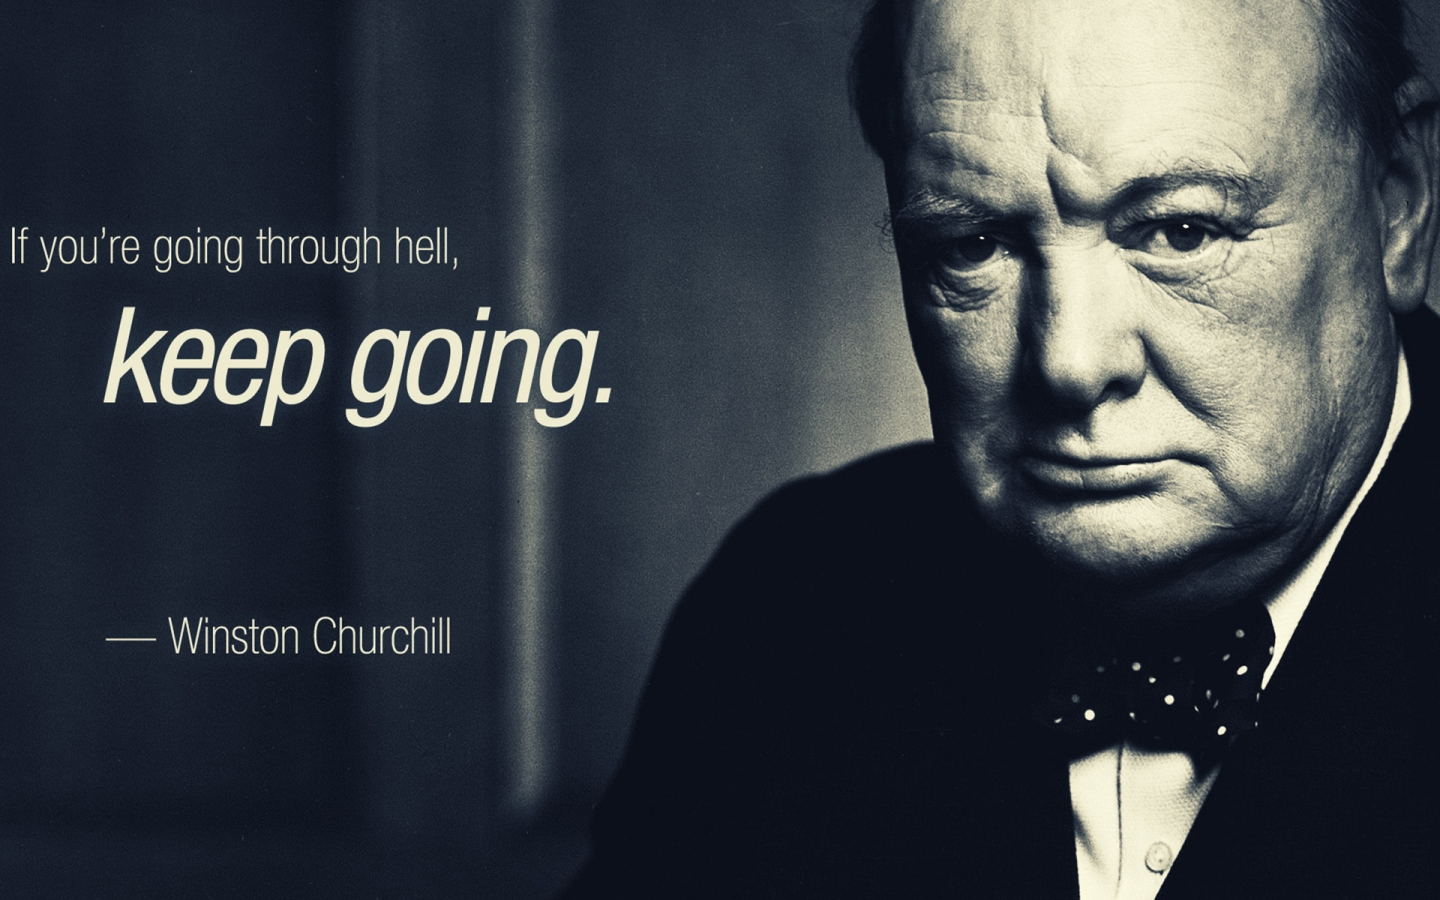 Winston Churchill Quote for 1440 x 900 widescreen resolution